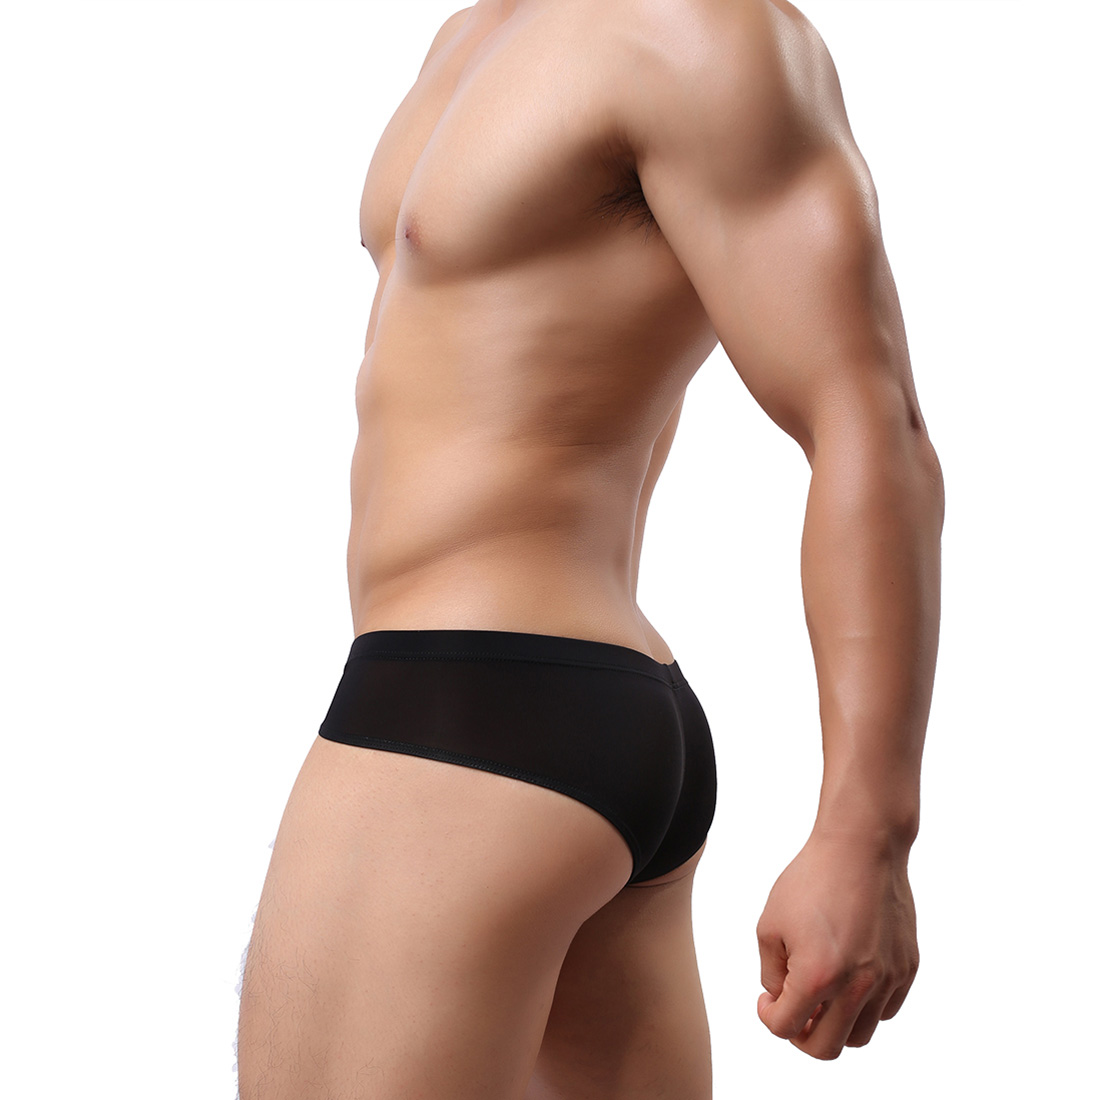 Men's Sexy Lingerie Underwear See-through Briefs Shorts Underpants WH43 Black L